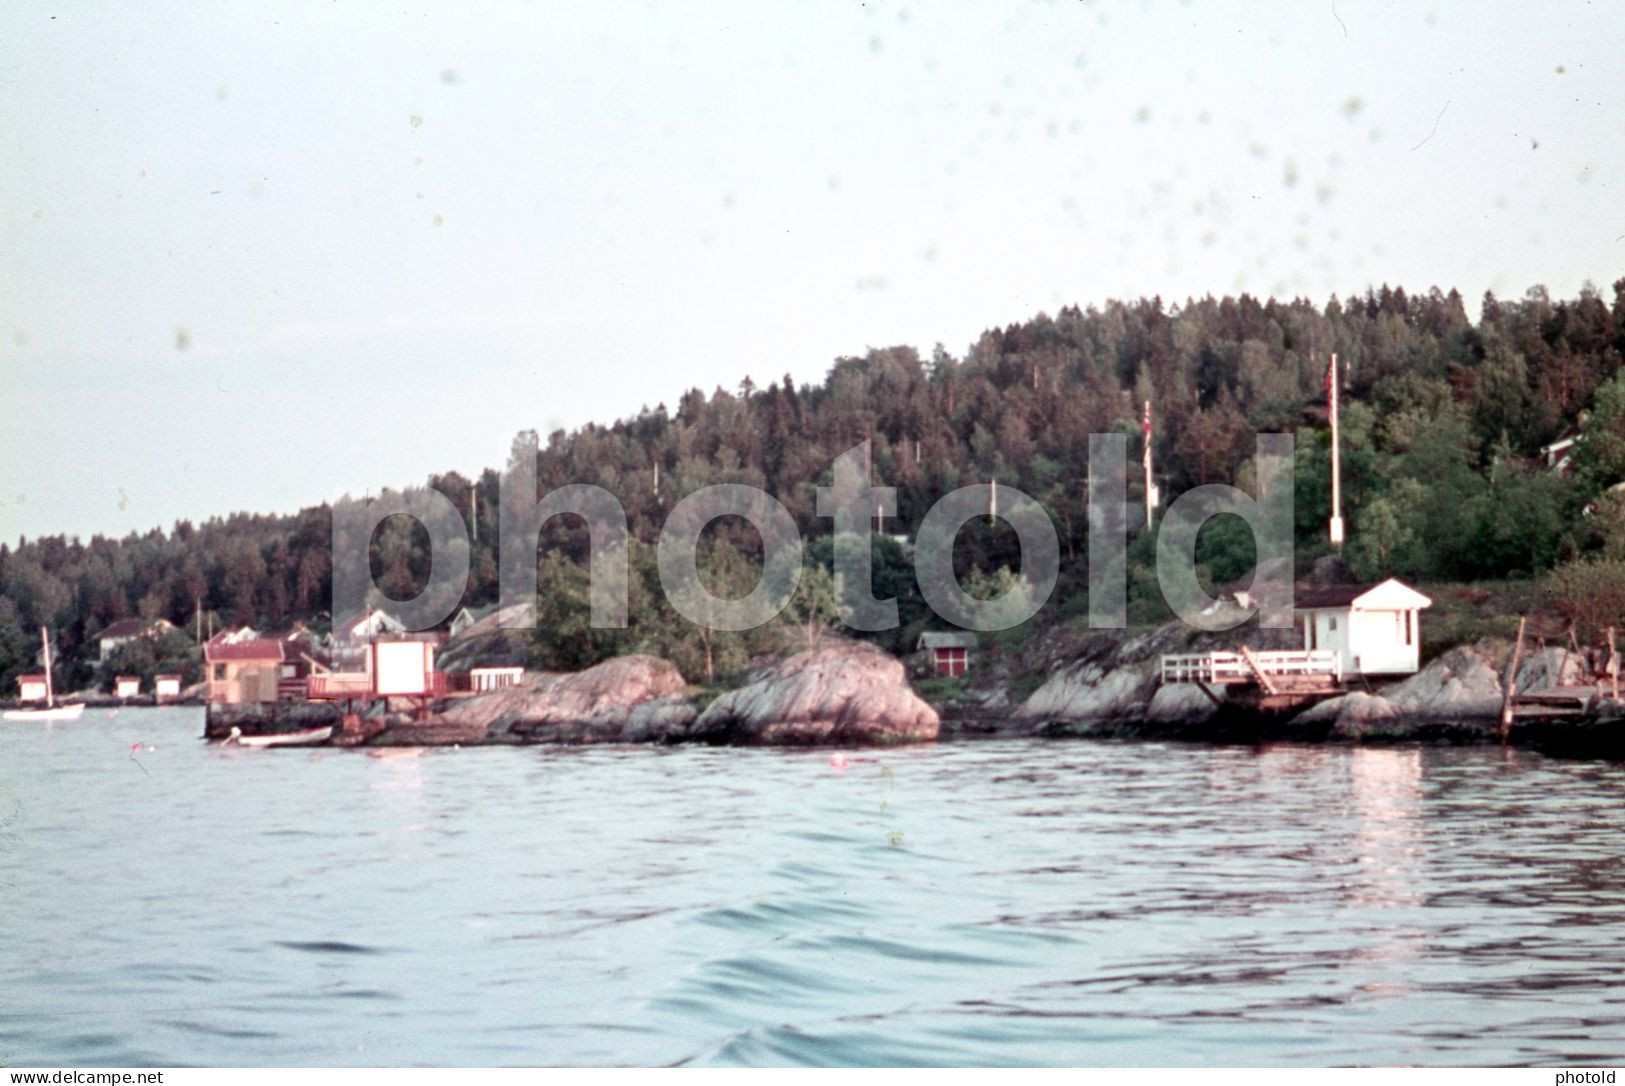 12 SLIDES SET 1977 OSLO NORWAY FJORDER NORGE AMATEUR 35mm SLIDE PHOTO 35mm DIAPOSITIVE SLIDE Not PHOTO No FOTO NB4105 - Diapositives